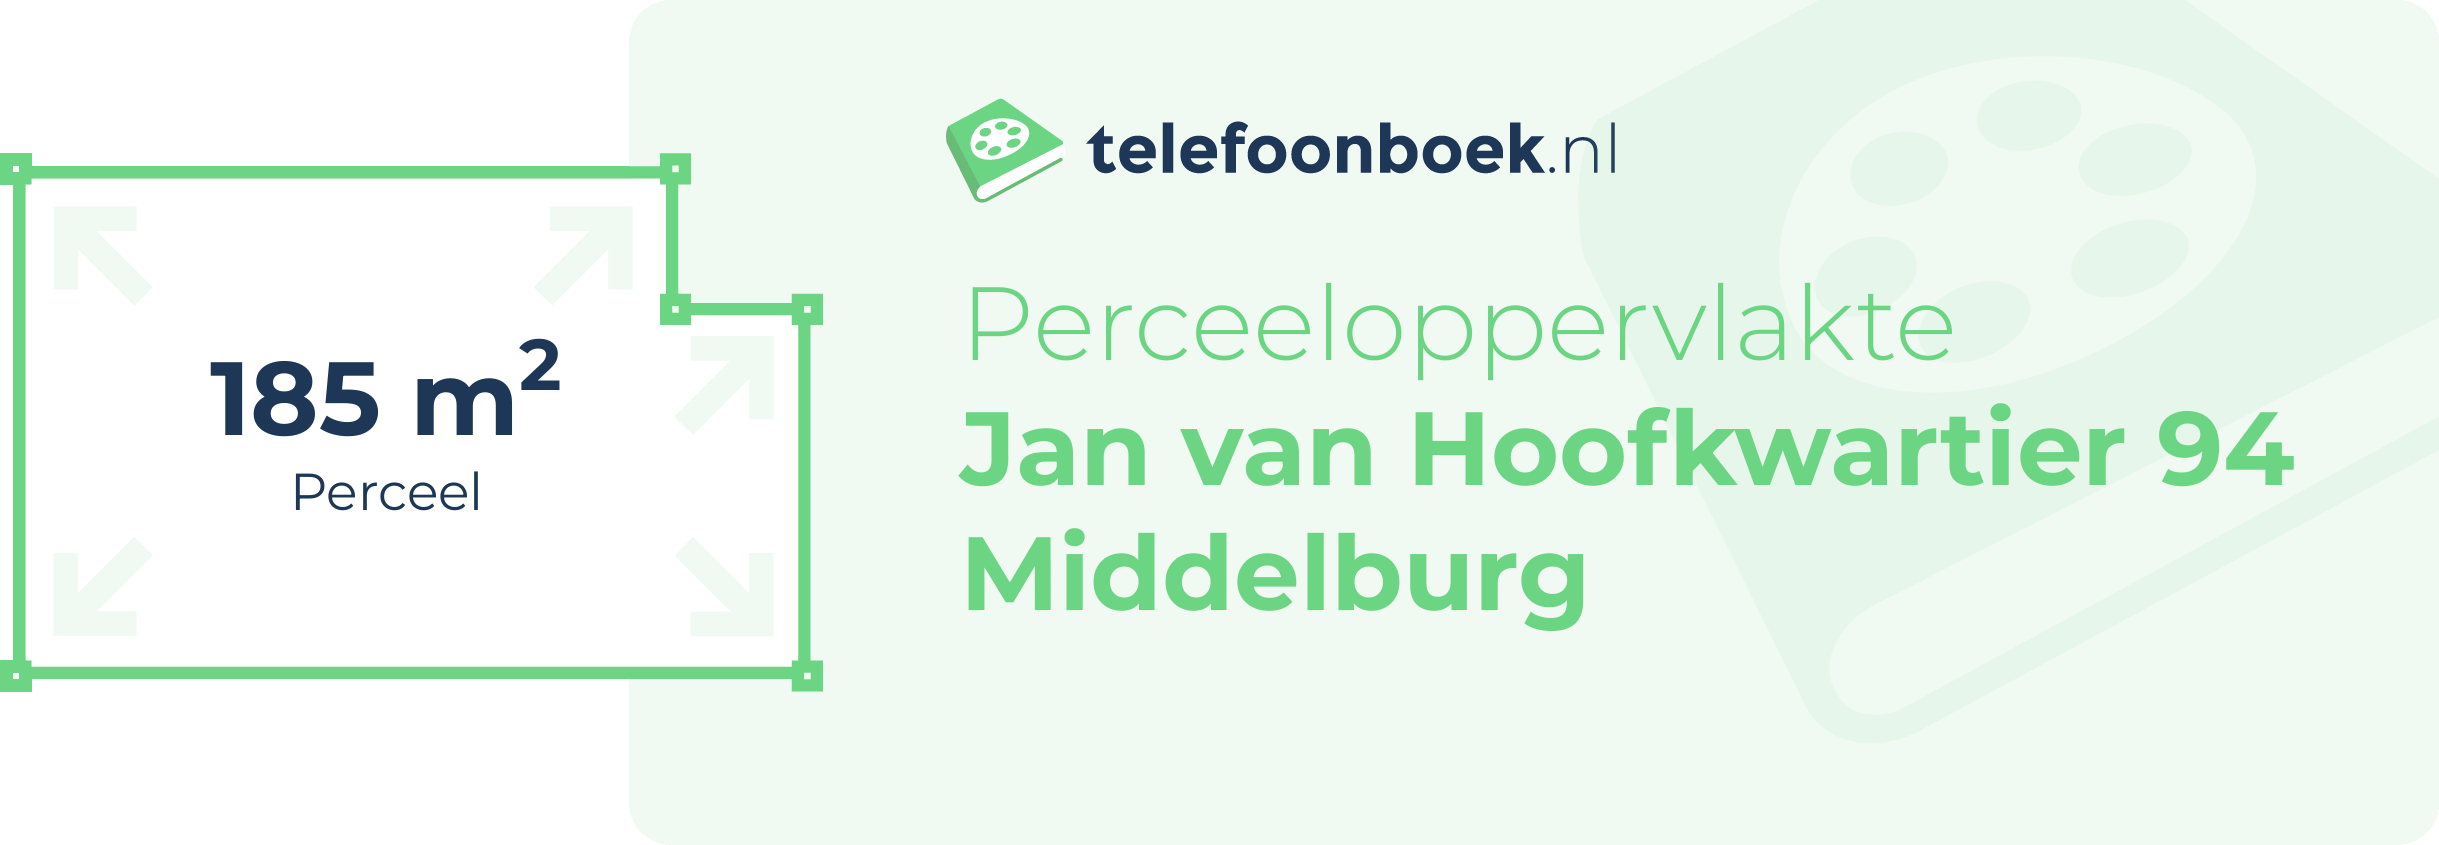 Perceeloppervlakte Jan Van Hoofkwartier 94 Middelburg